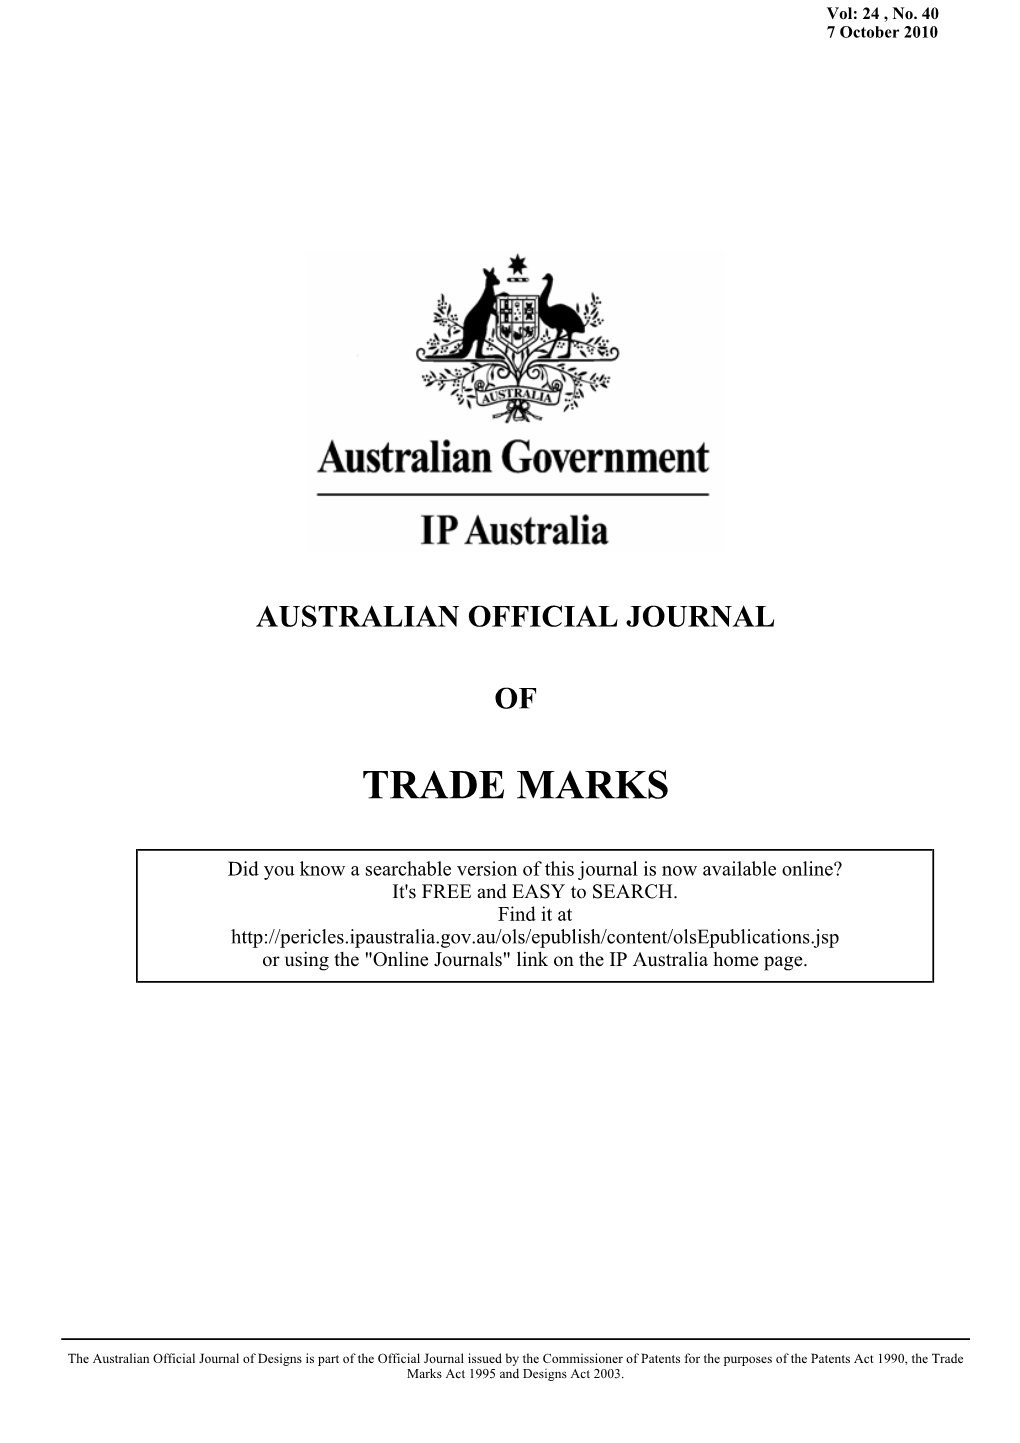 AUSTRALIAN OFFICIAL JOURNAL of TRADE MARKS 7 October 2010